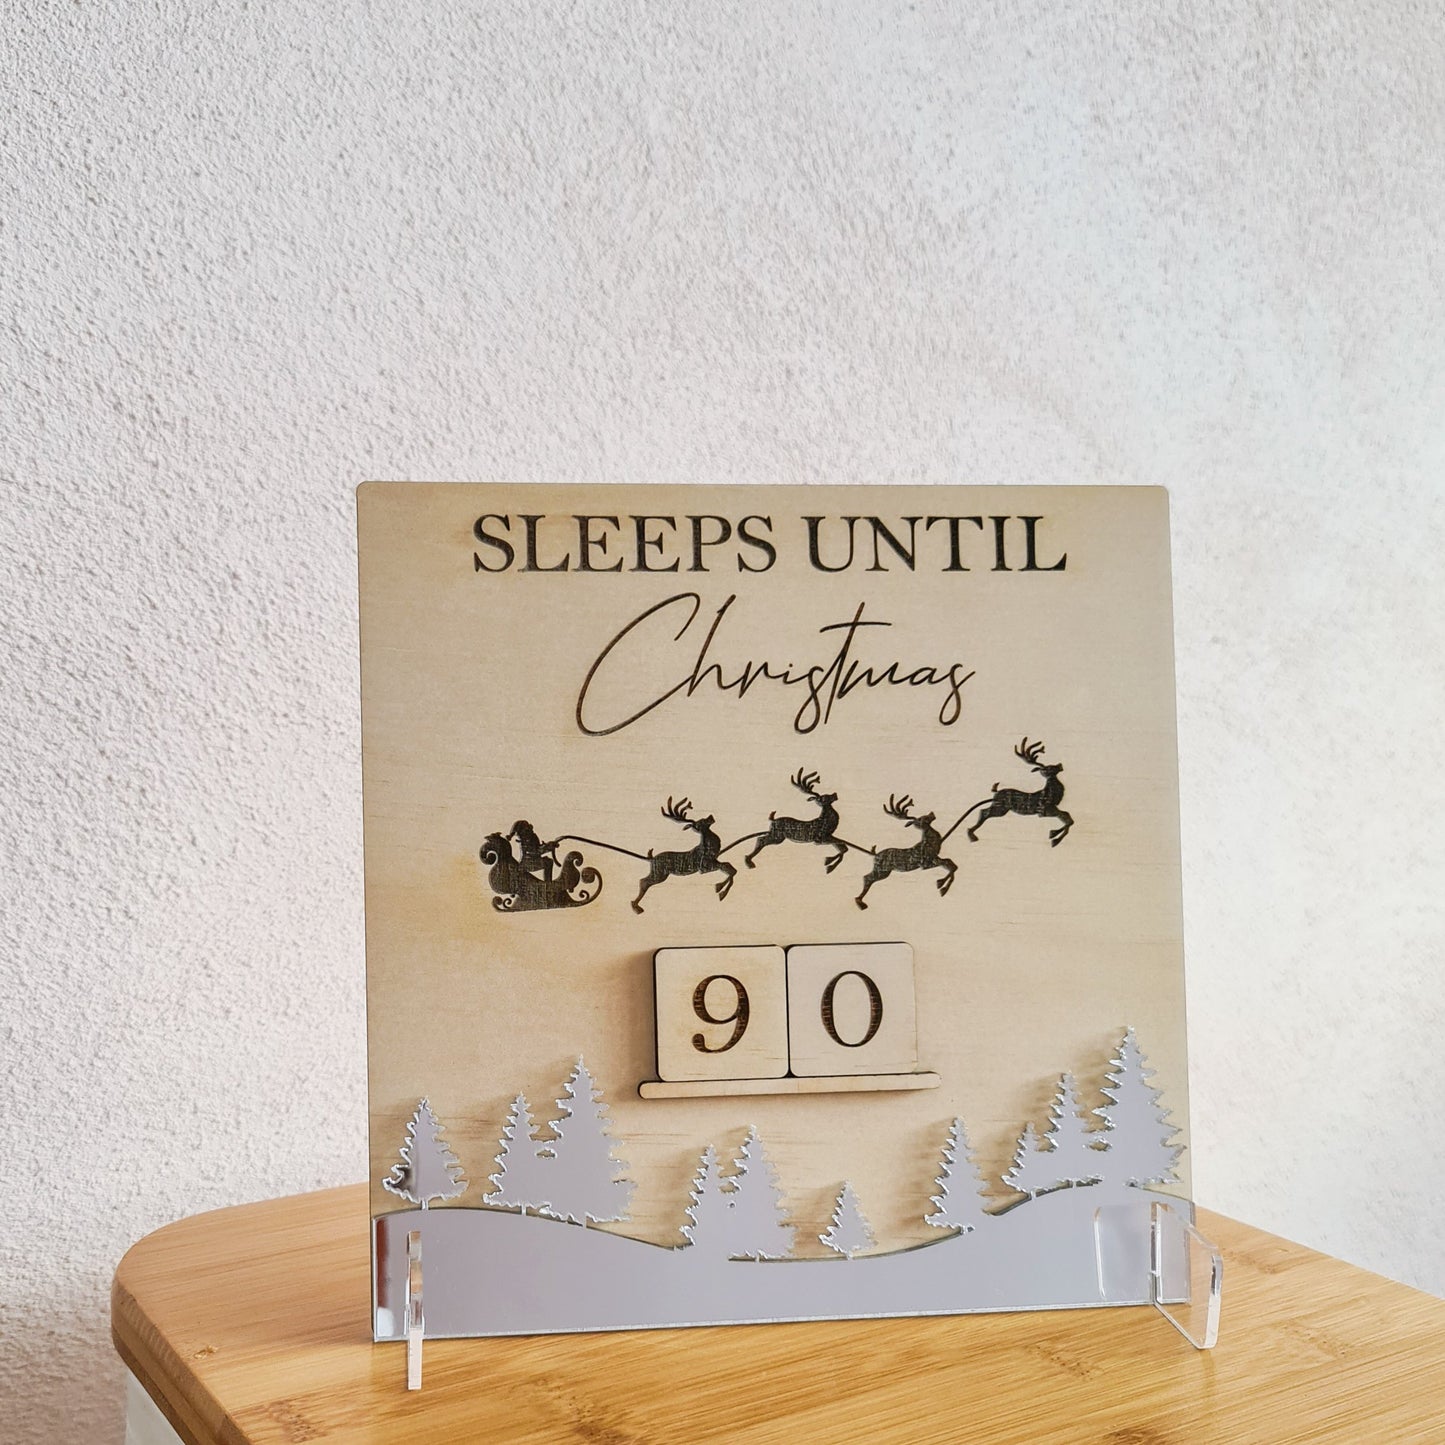 Sleeps until Christmas Countdown